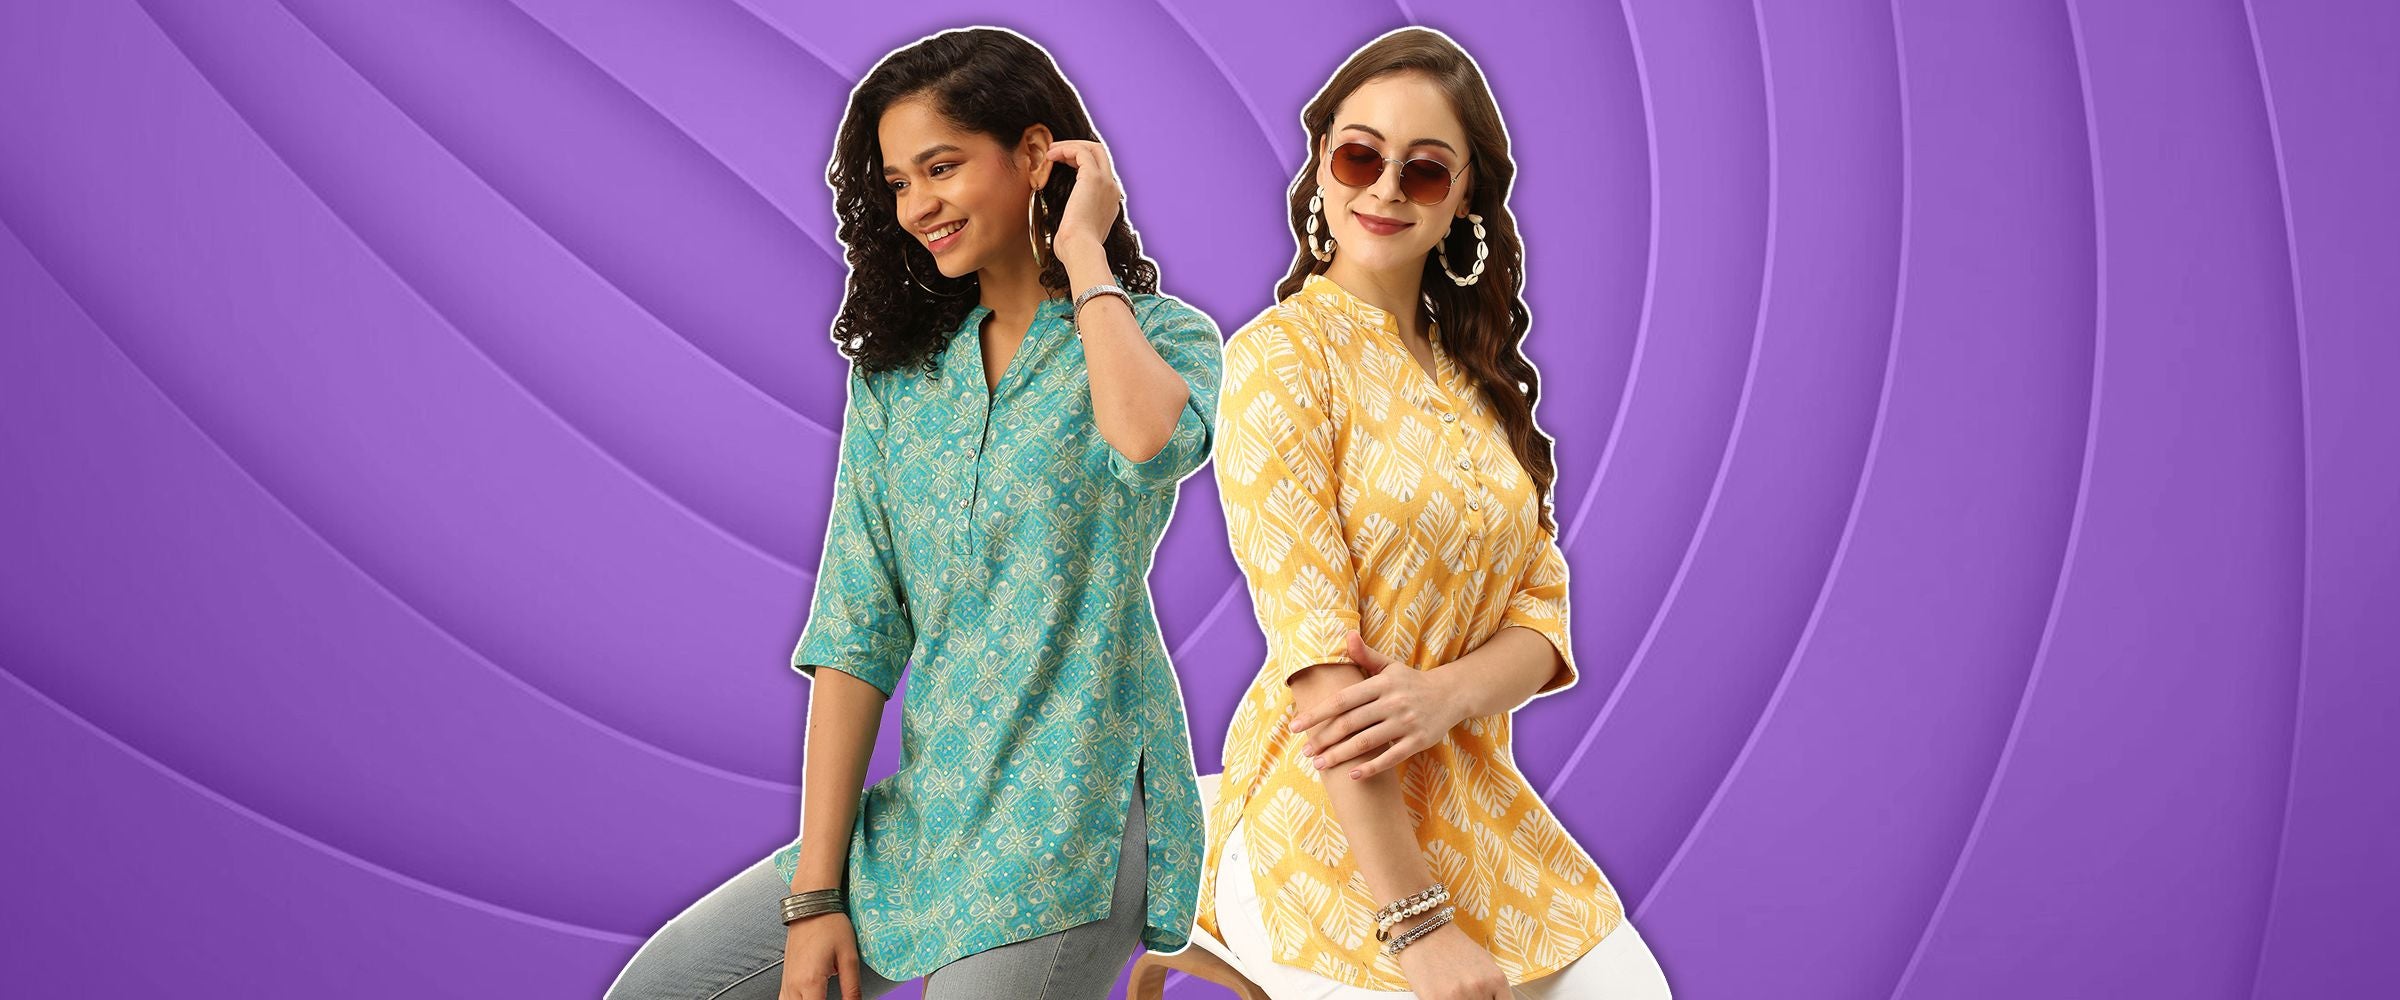 Pongal Family Fashion: Coordinated Looks for Joyous Celebrations